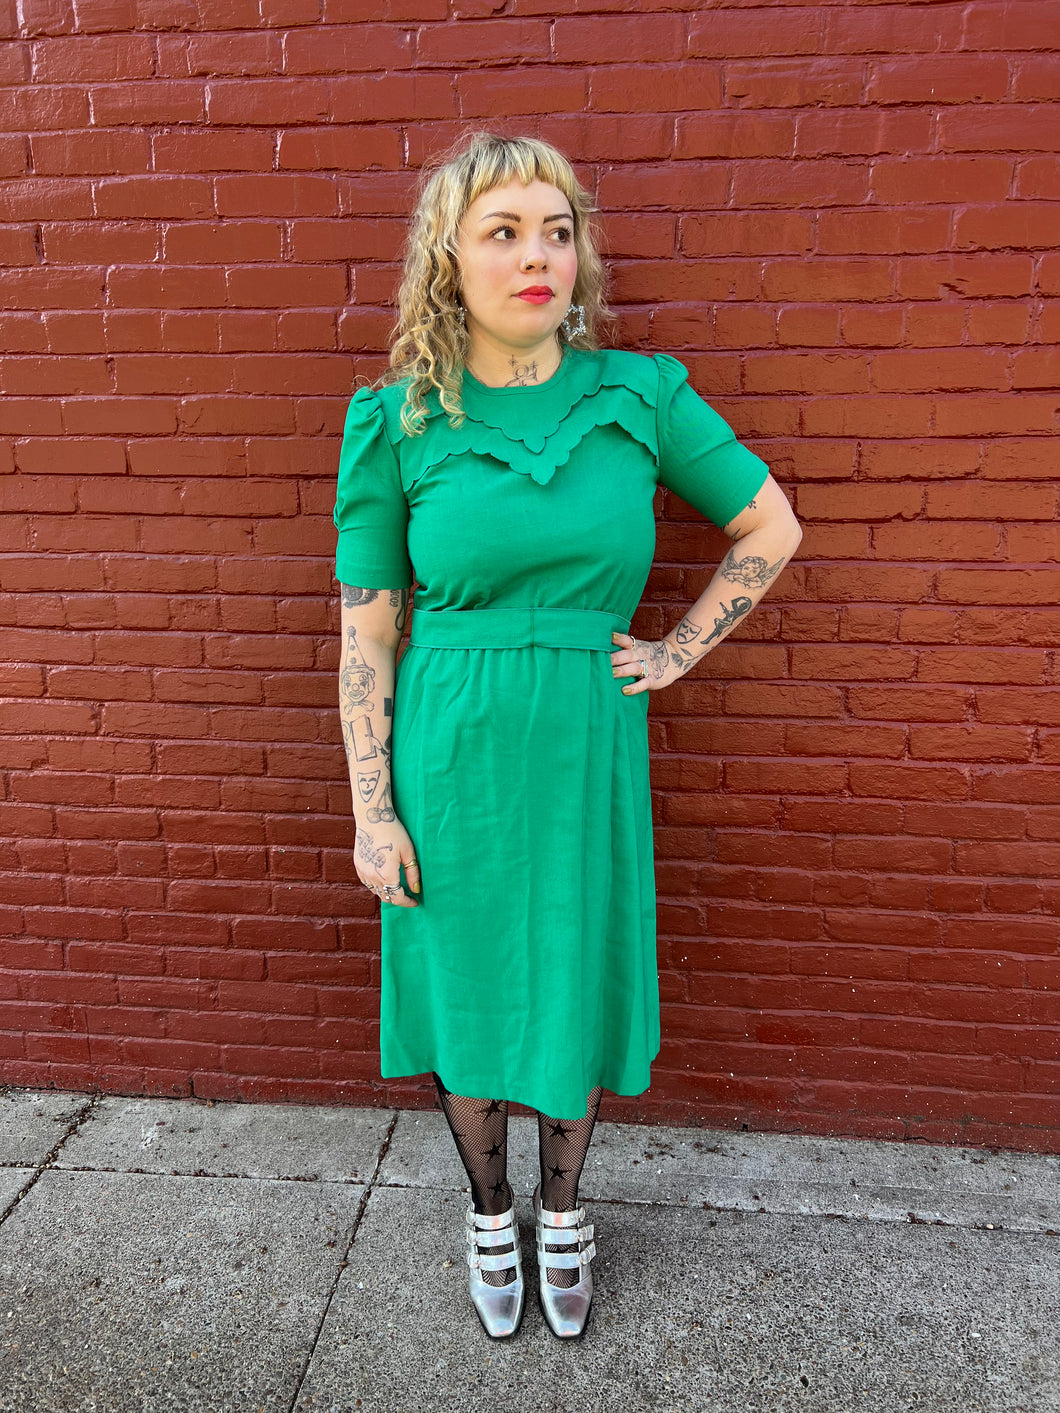 Vibrant Green Ruffle Dress